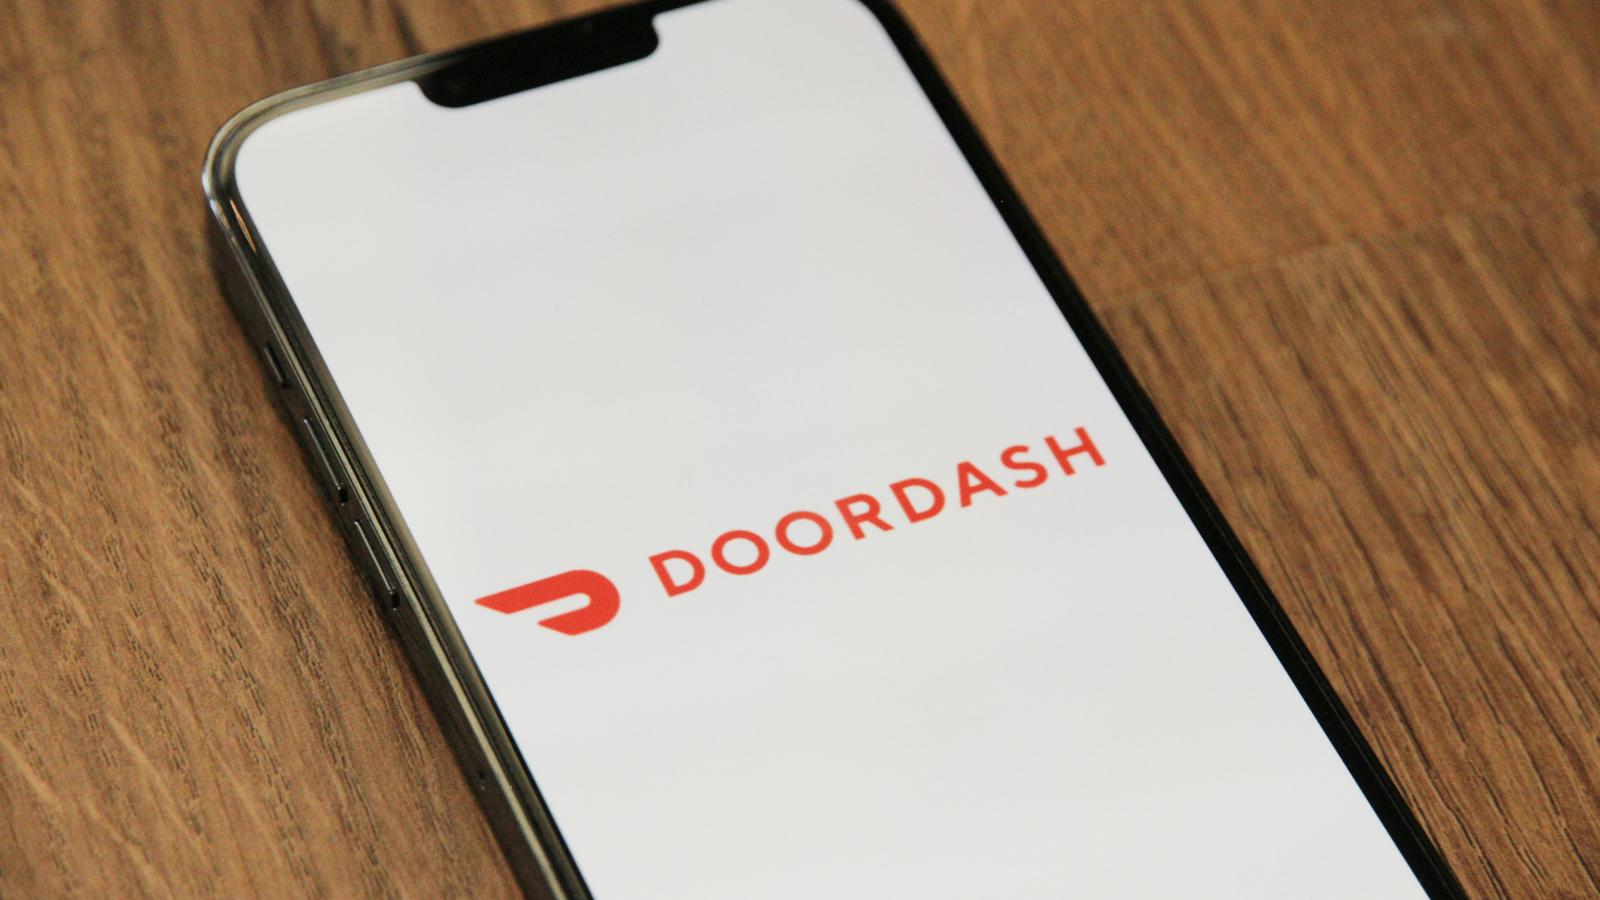 DoorDash logo on a phone